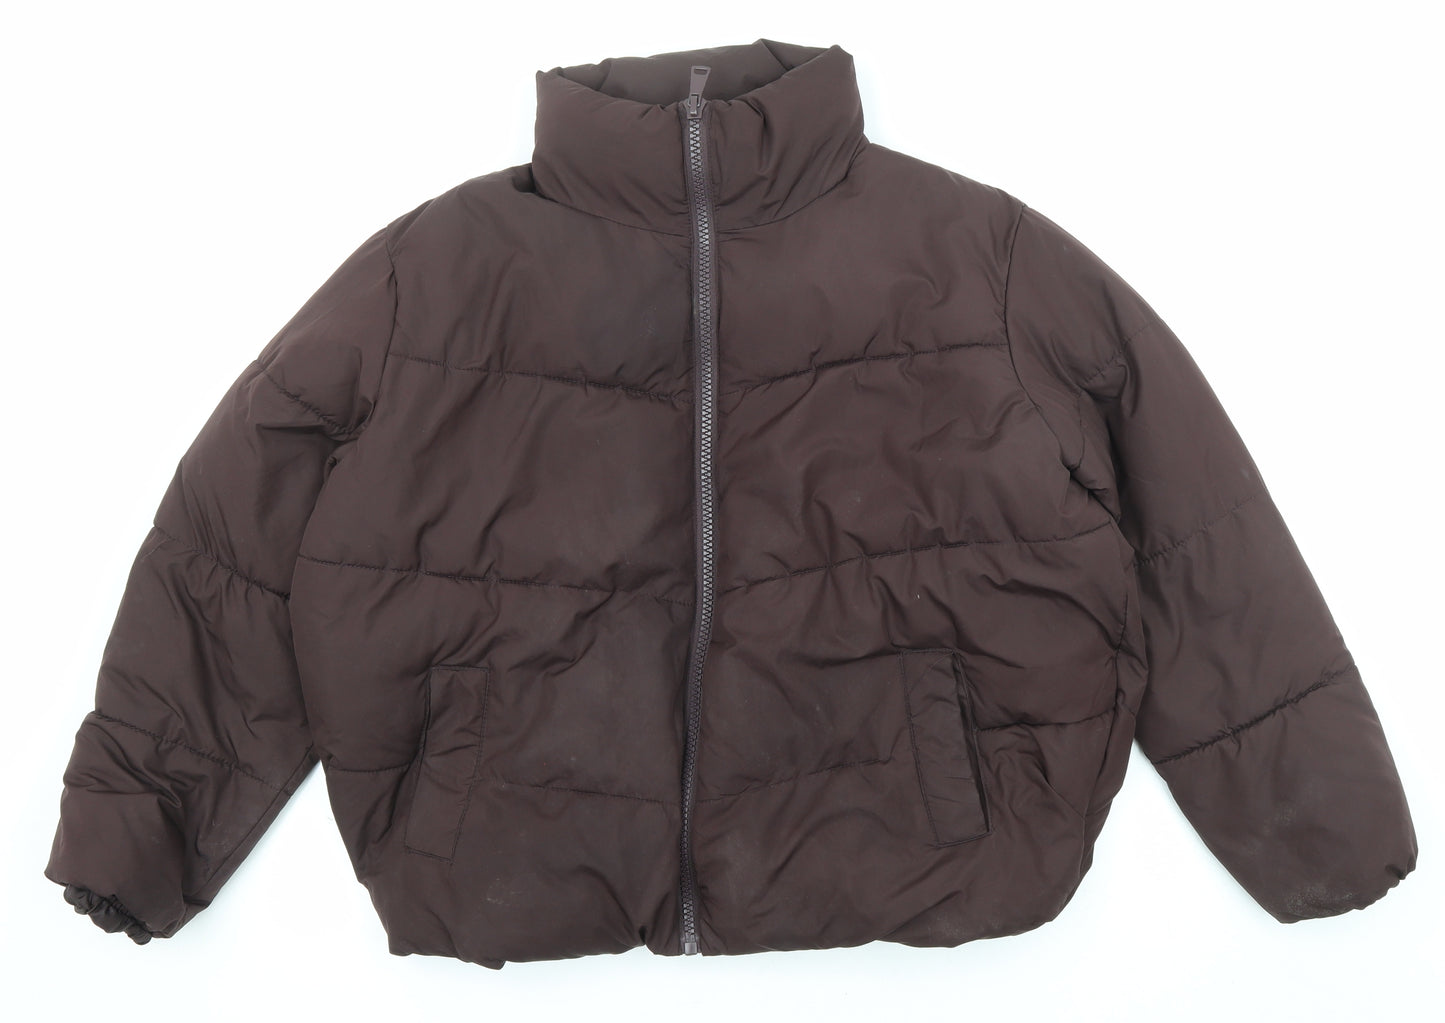 New Look Womens Brown Puffer Jacket Coat Size L Zip